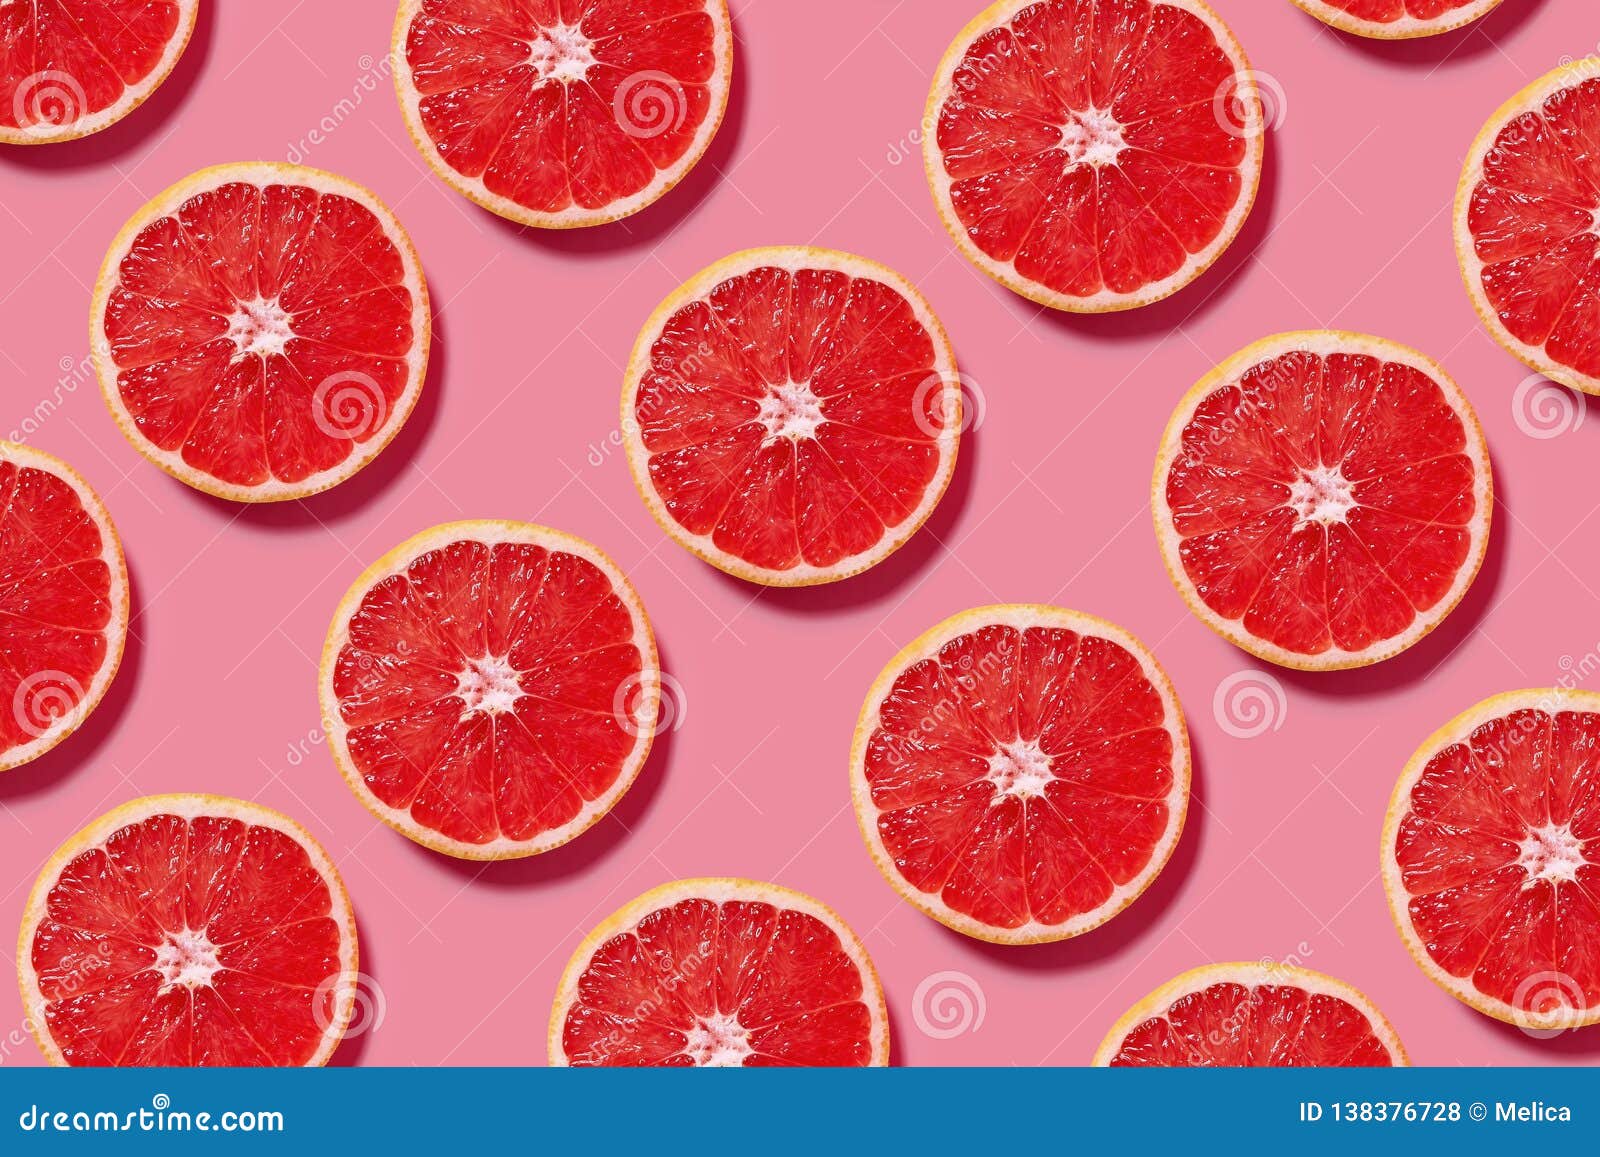 colorful fruit pattern of fresh grapefruit slices on pink background